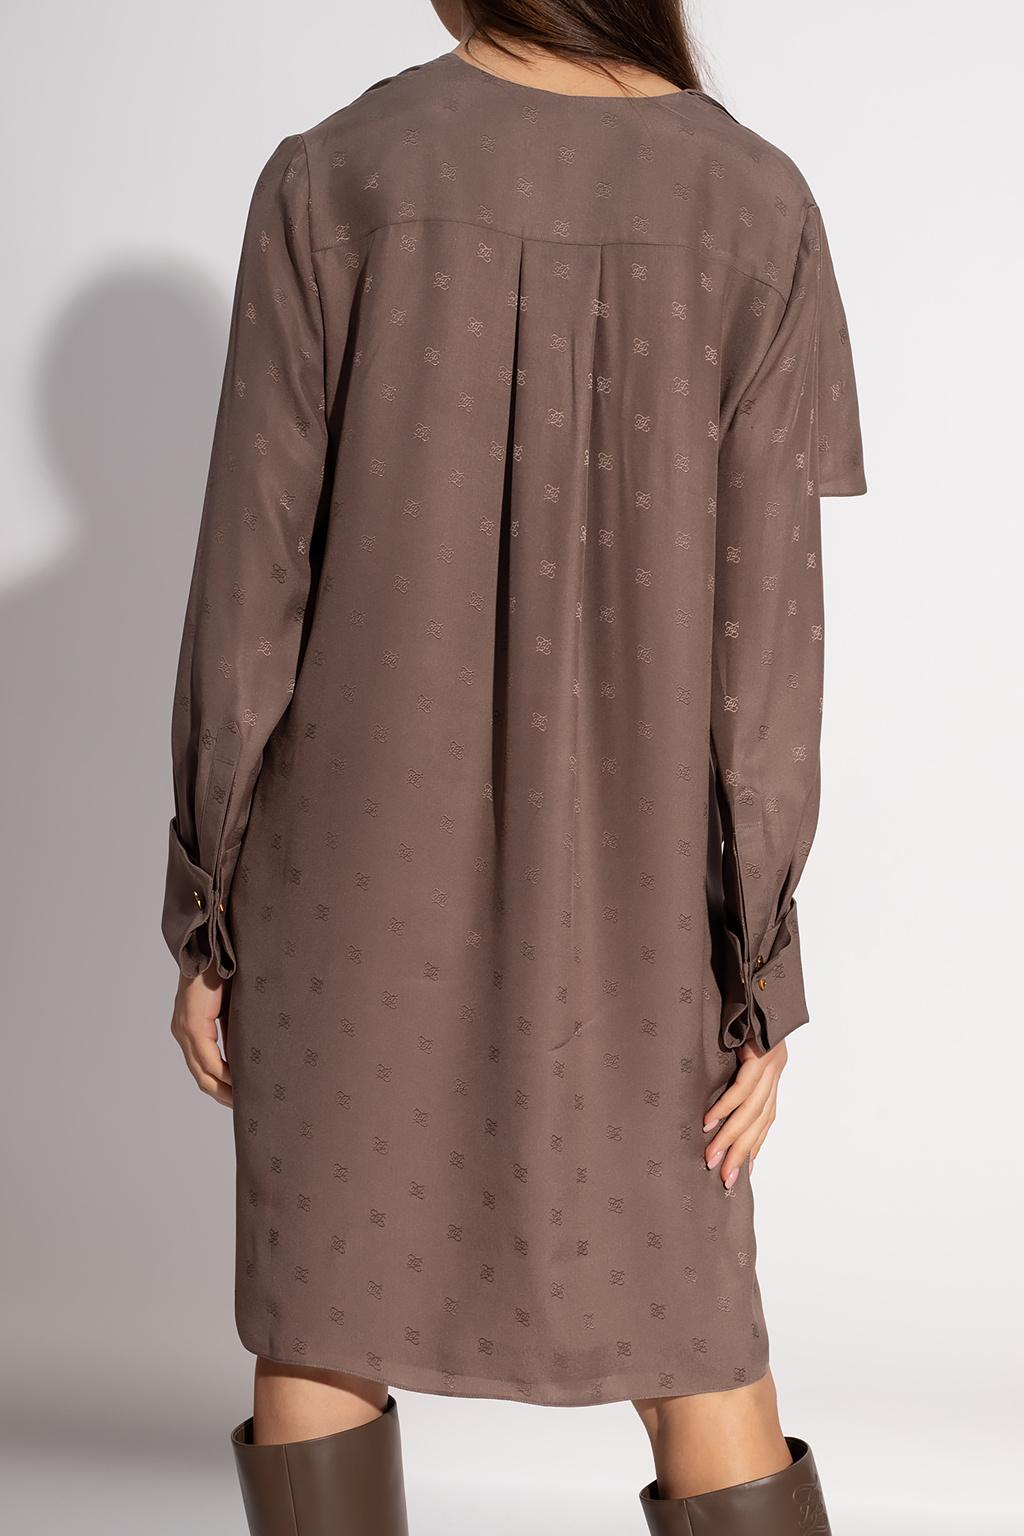 Fendi Silk Dress in Brown | Lyst